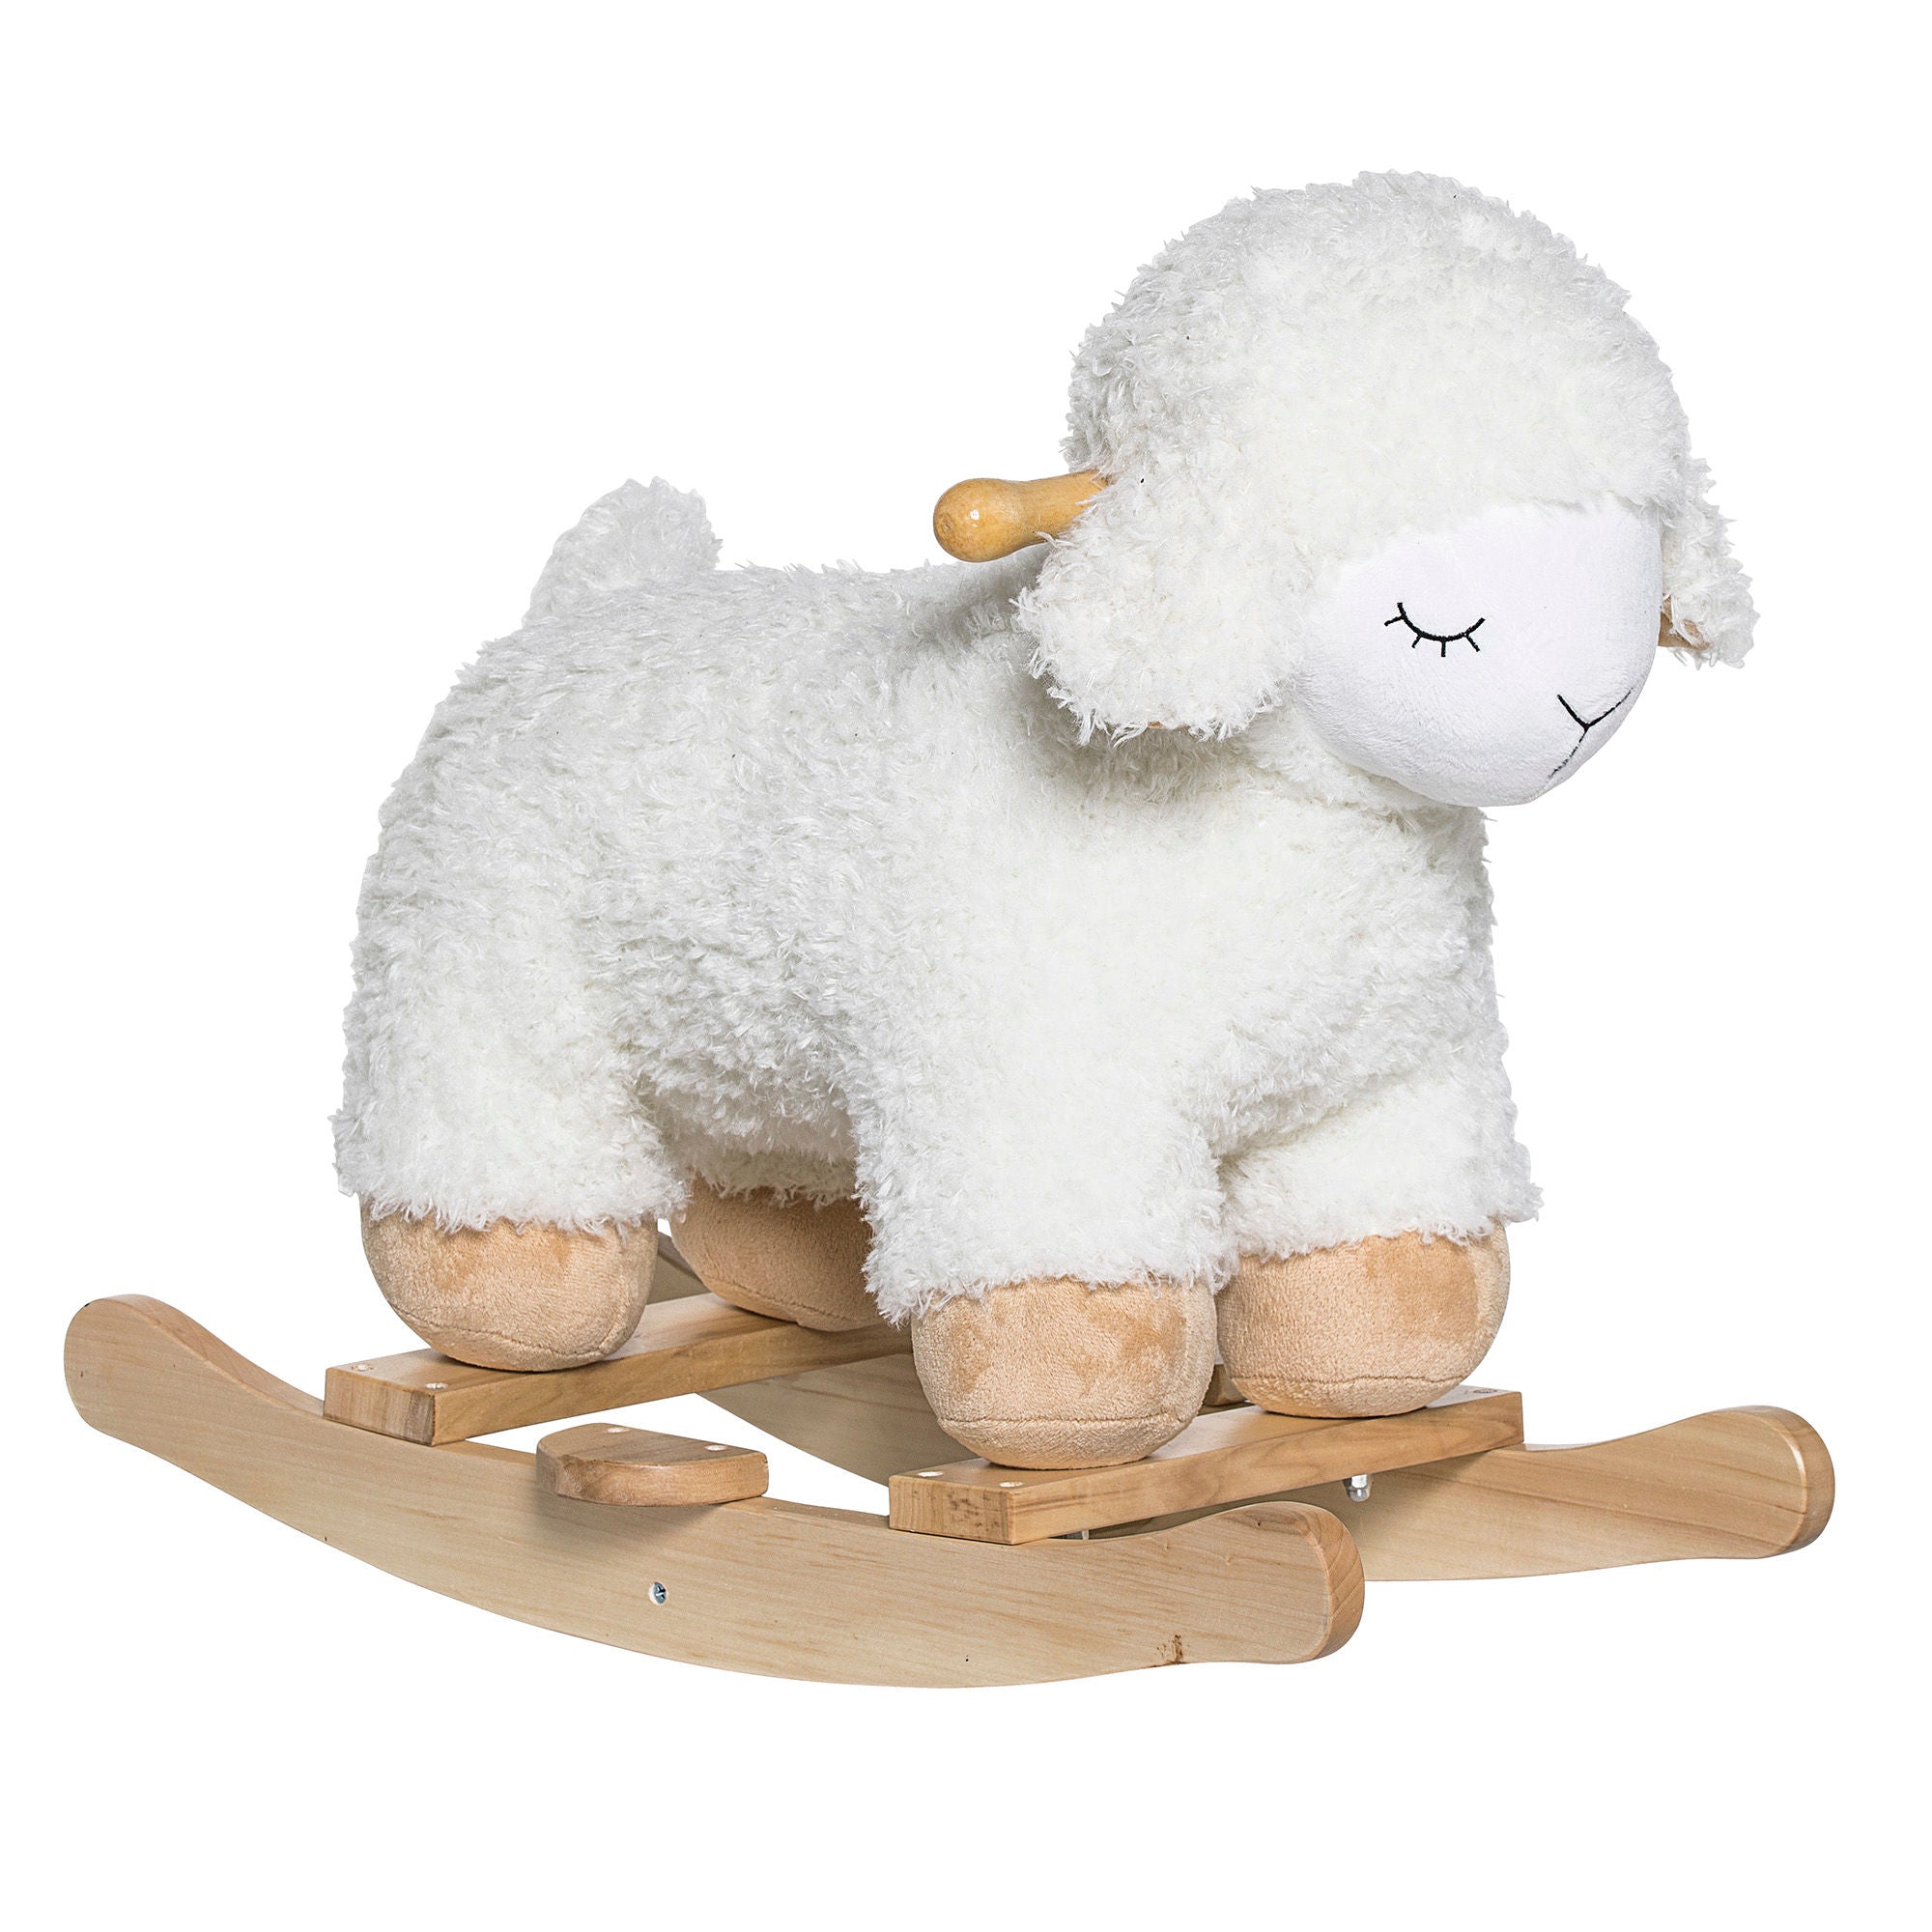 Bloomingville Mini Laasrith Rocking Toy, oveja, blanco, poliéster